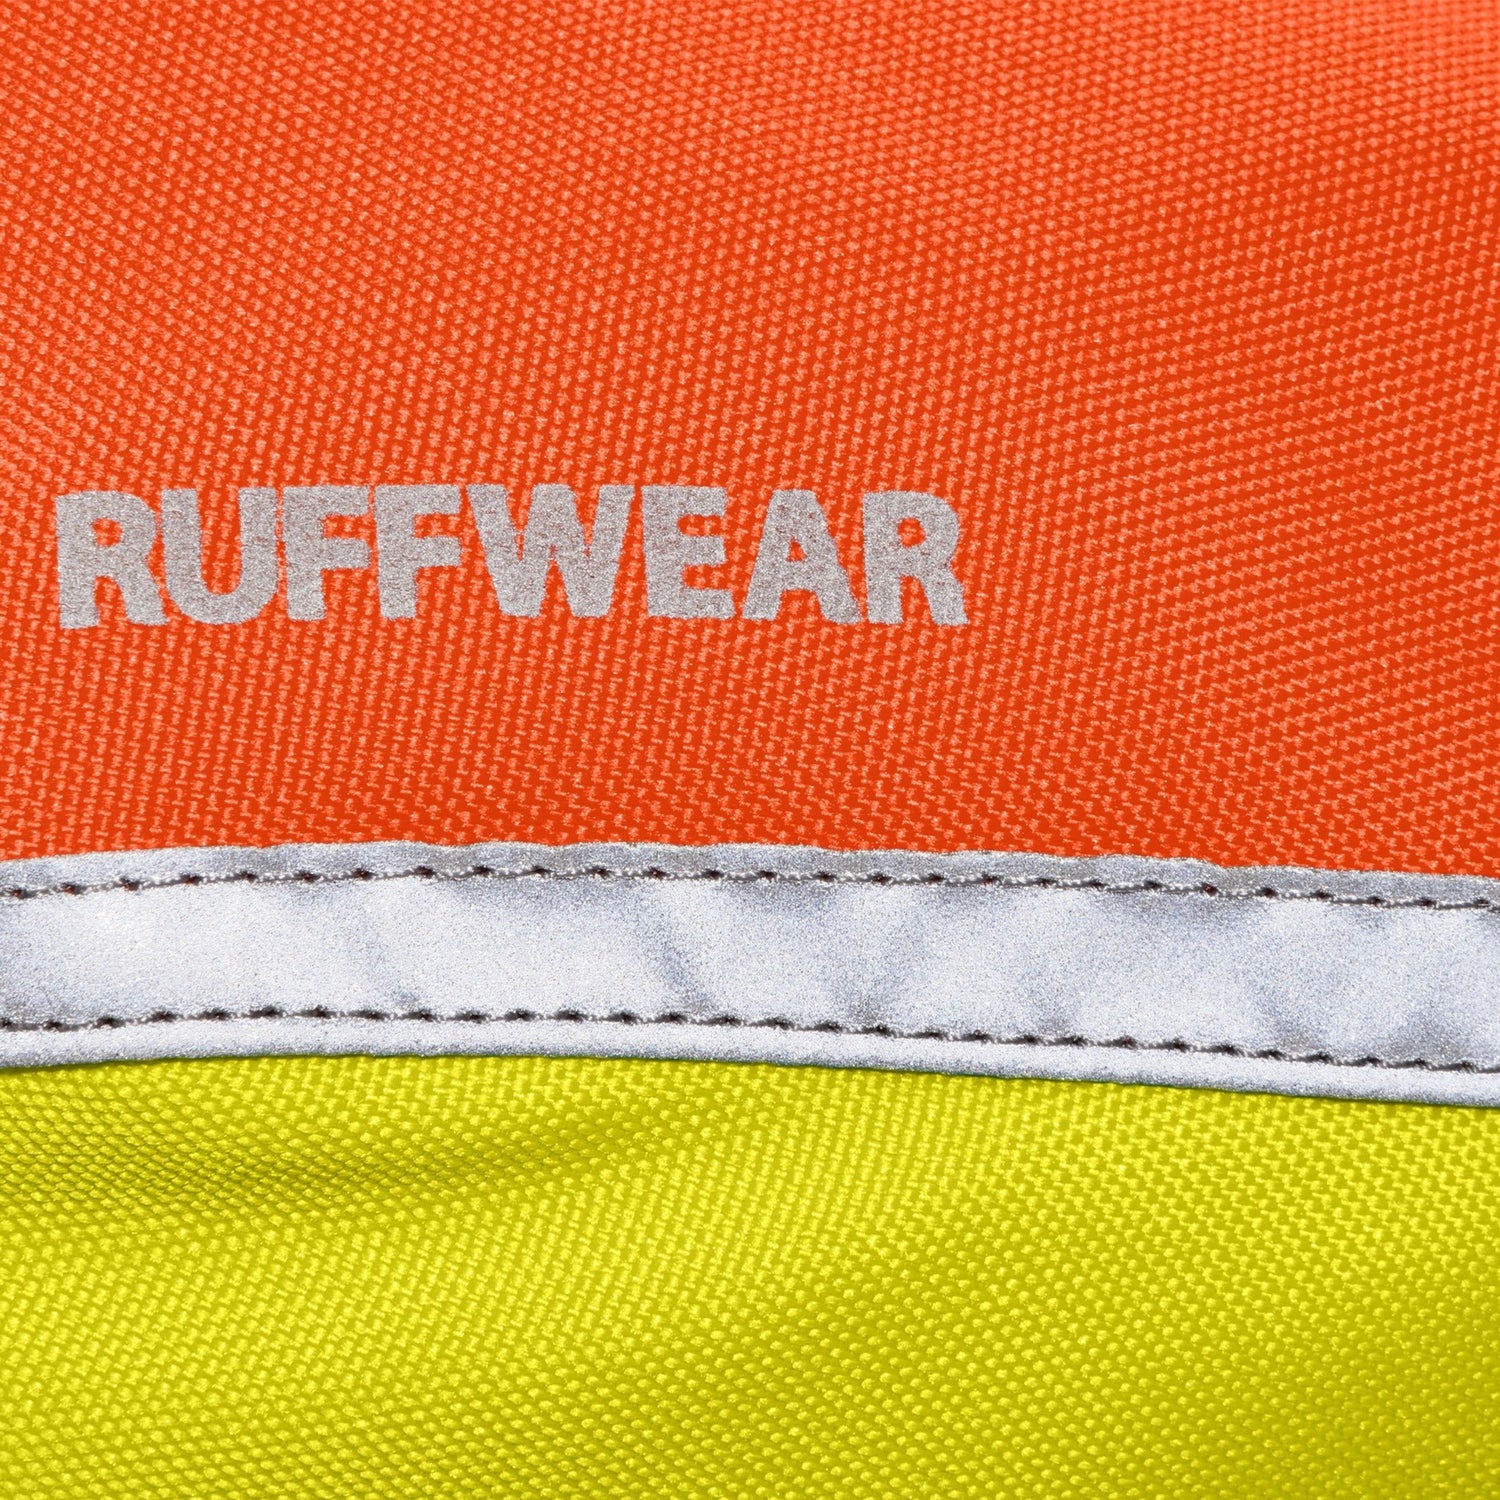 Ruffwear Lumenglow High-Vis Jacket, Hundewarnweste